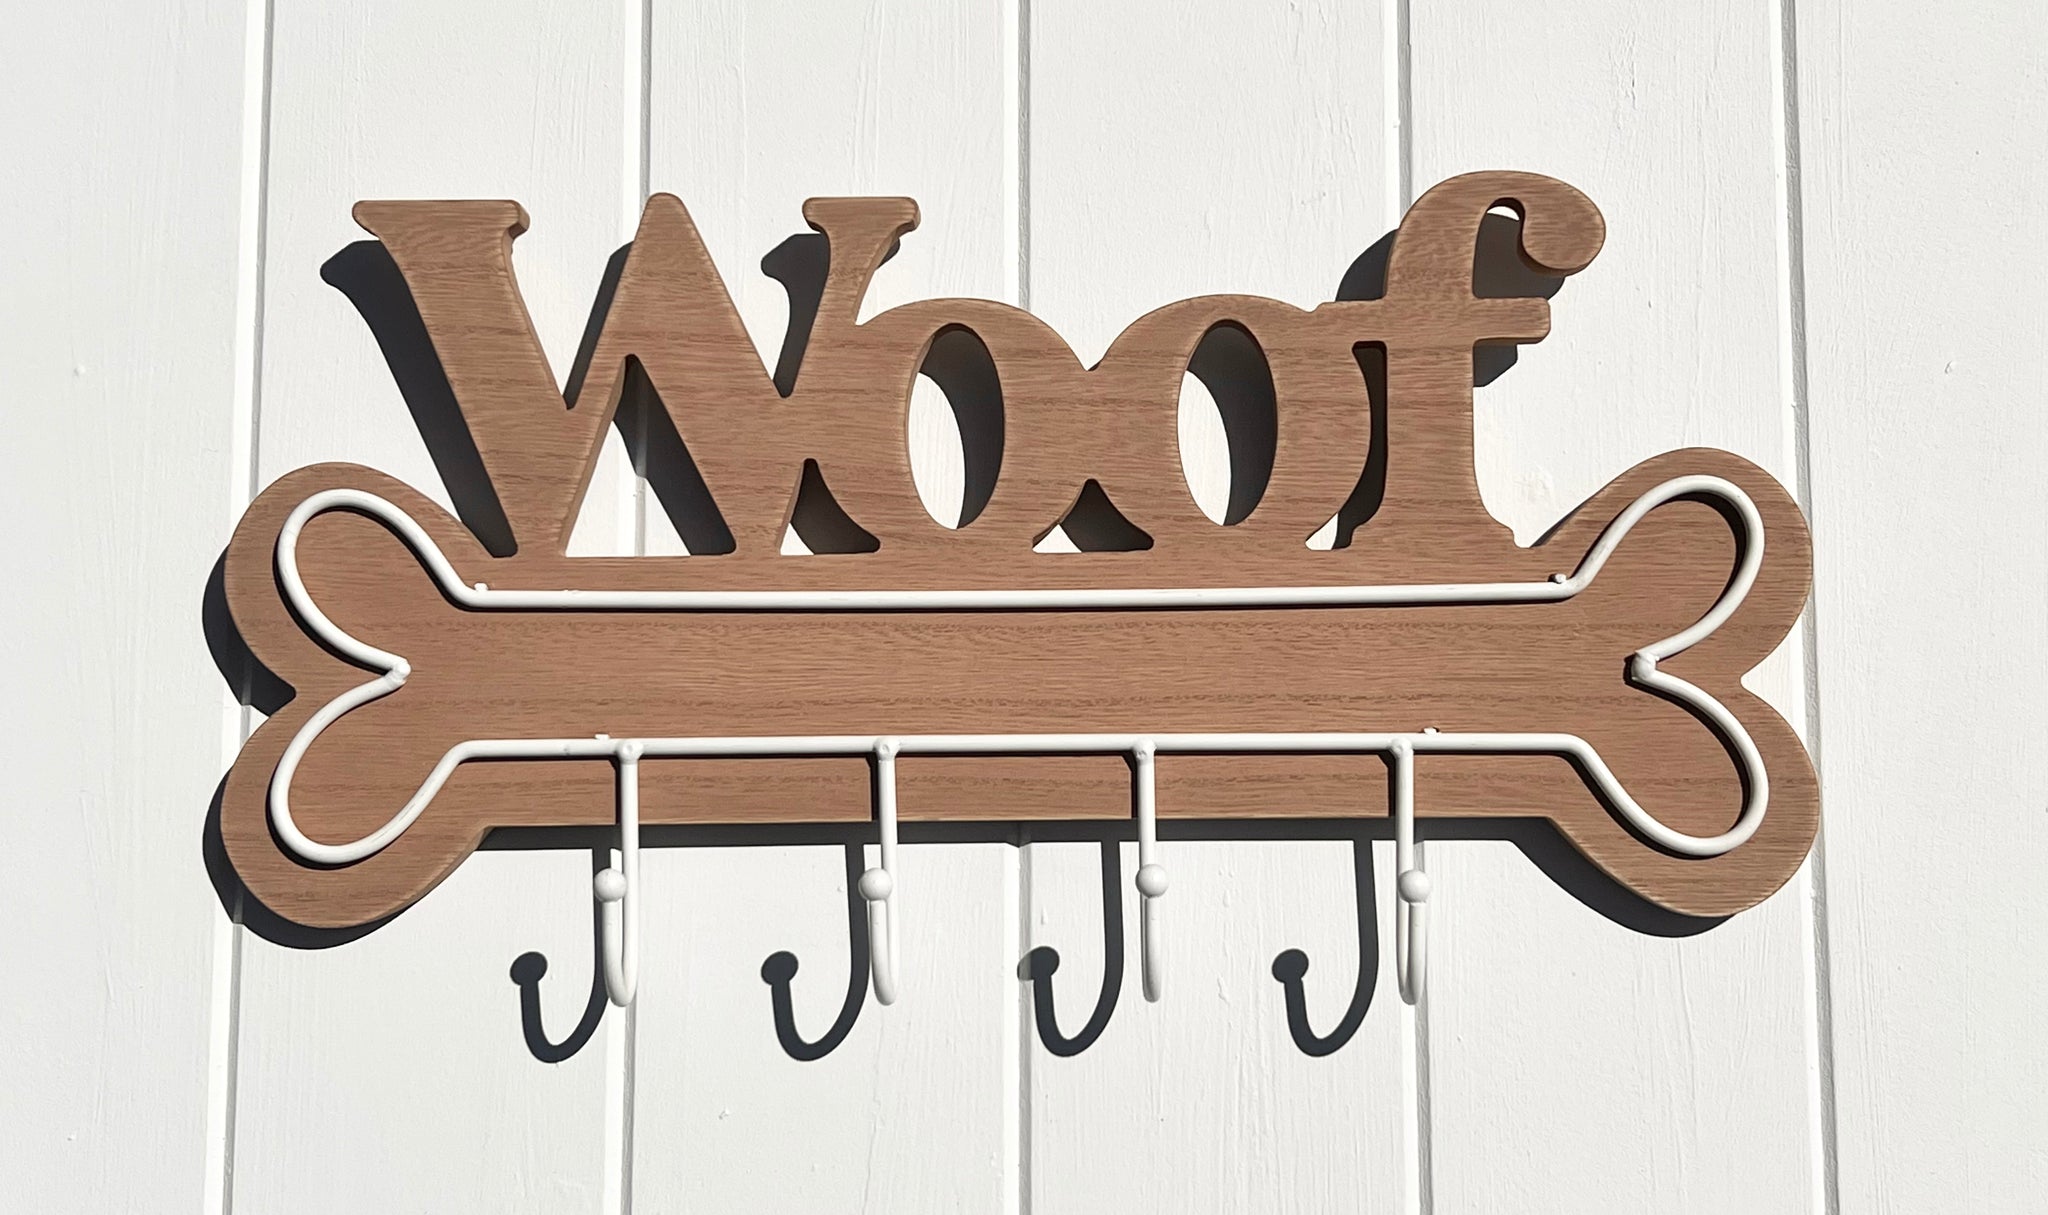 ‘Woof’ Dog Lead Hanger